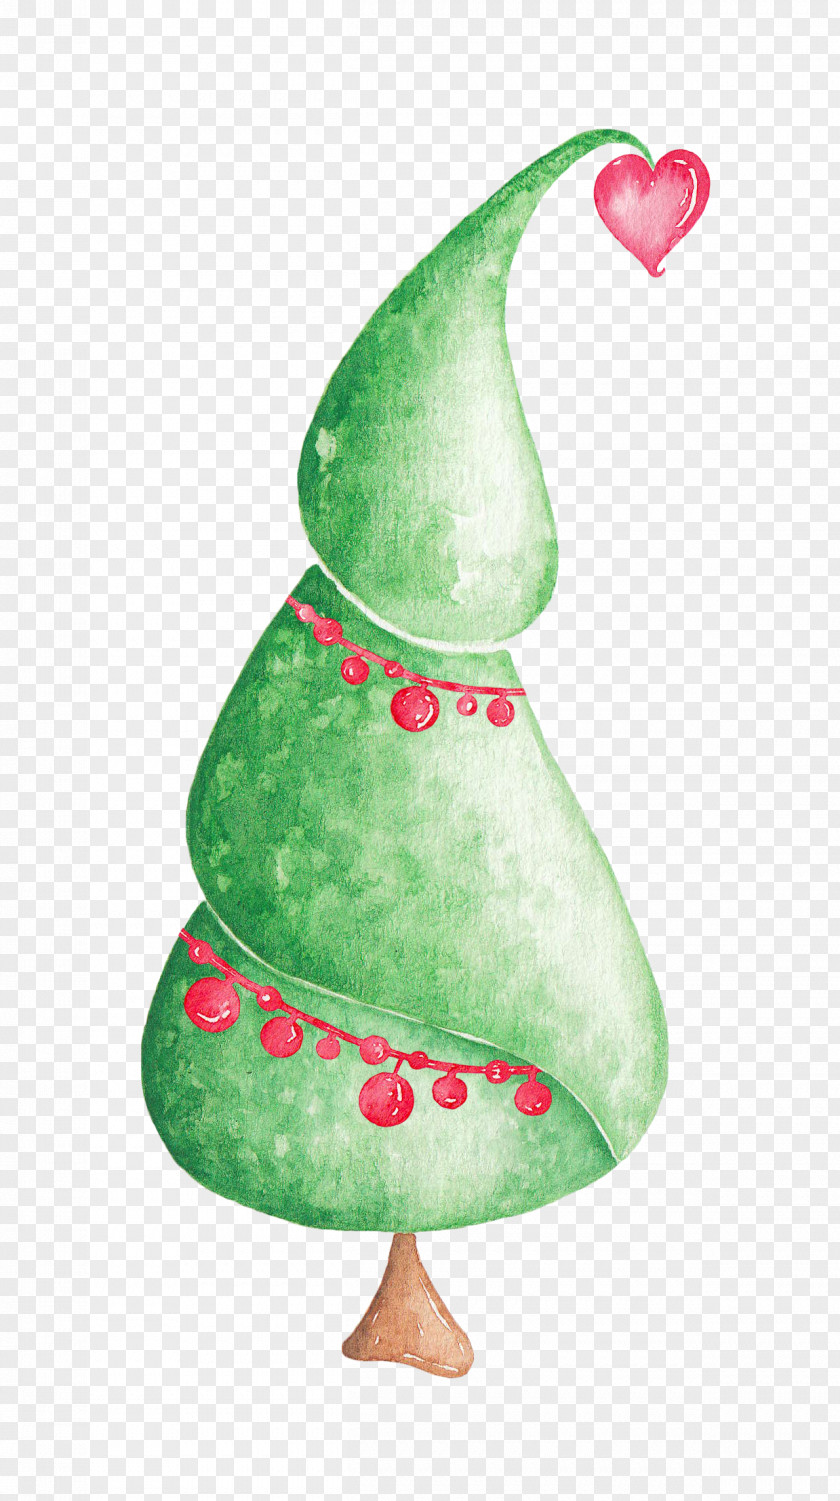 Christmas Tree Illustration PNG